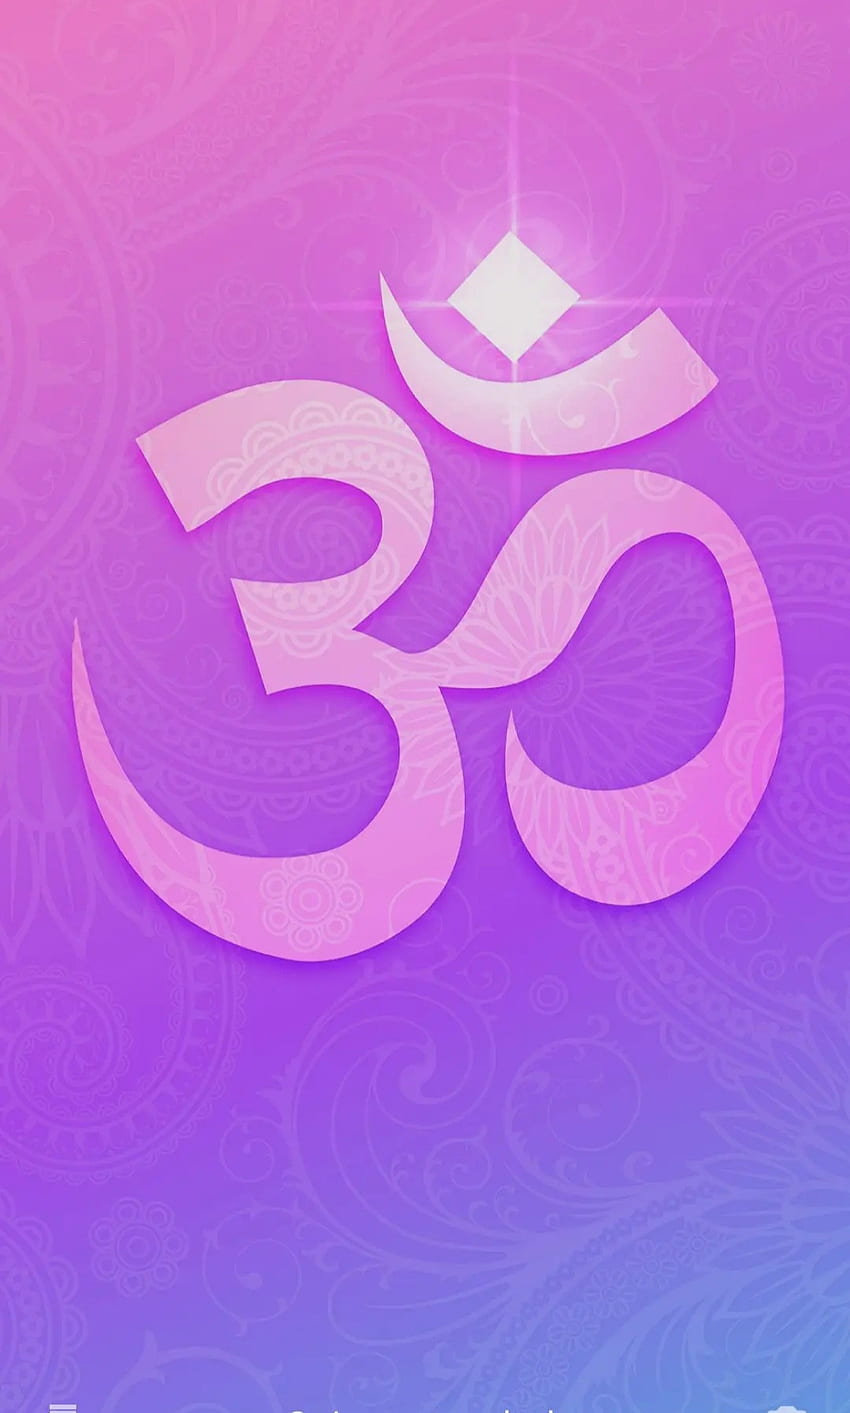 Om, Bramha, Sanatan, Hinduísmo, Deus Papel de parede de celular HD